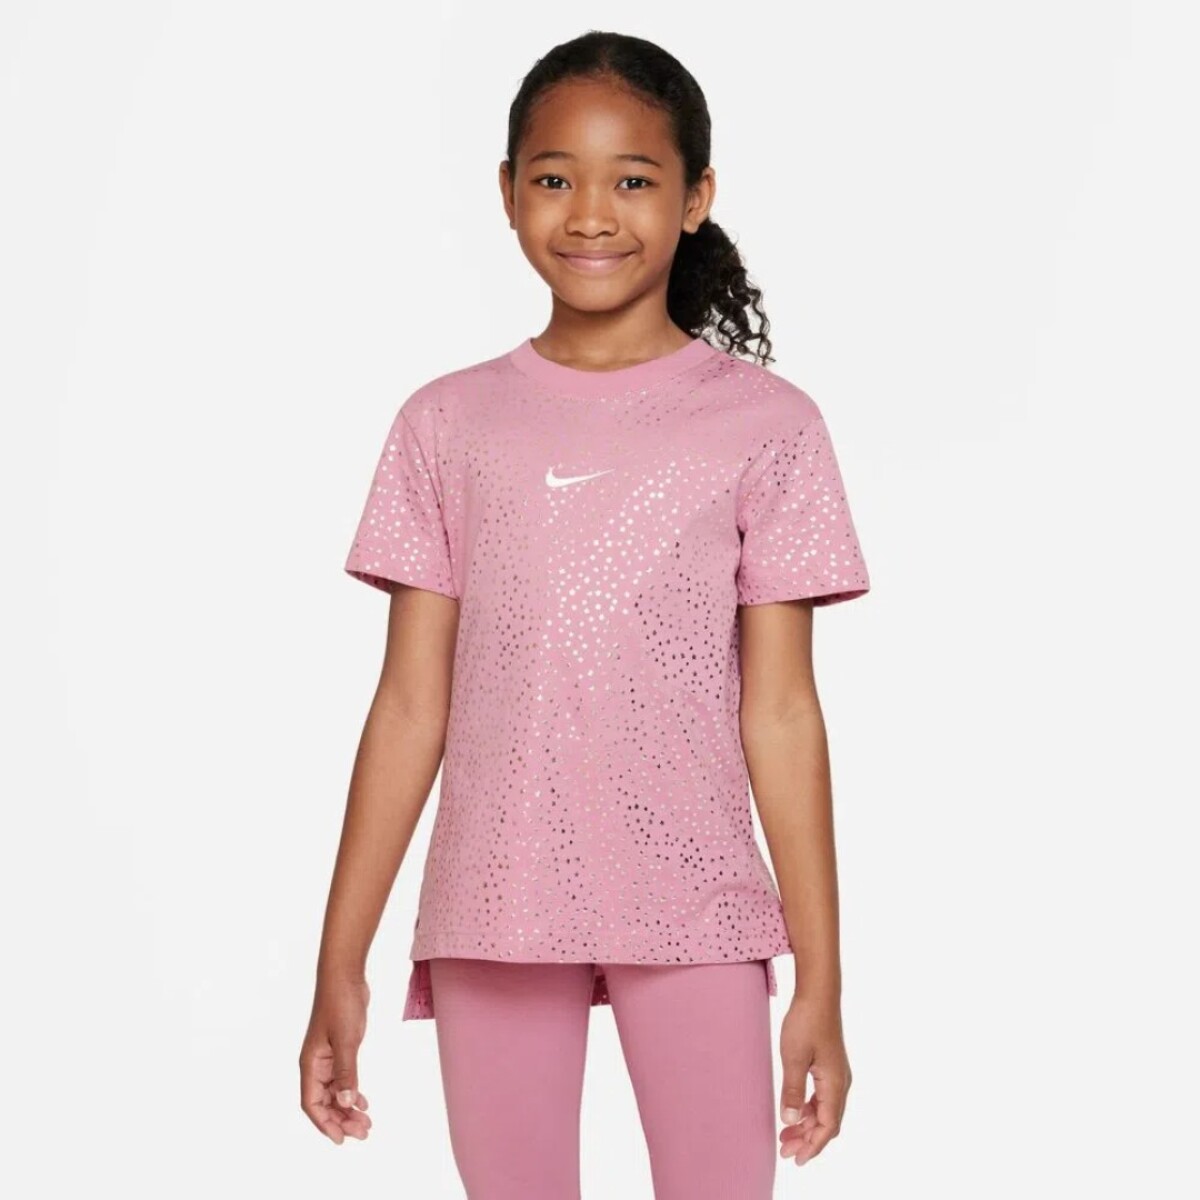 Remera Nike Niño Tee Hilo Shine Aop Elemental Pink - S/C 